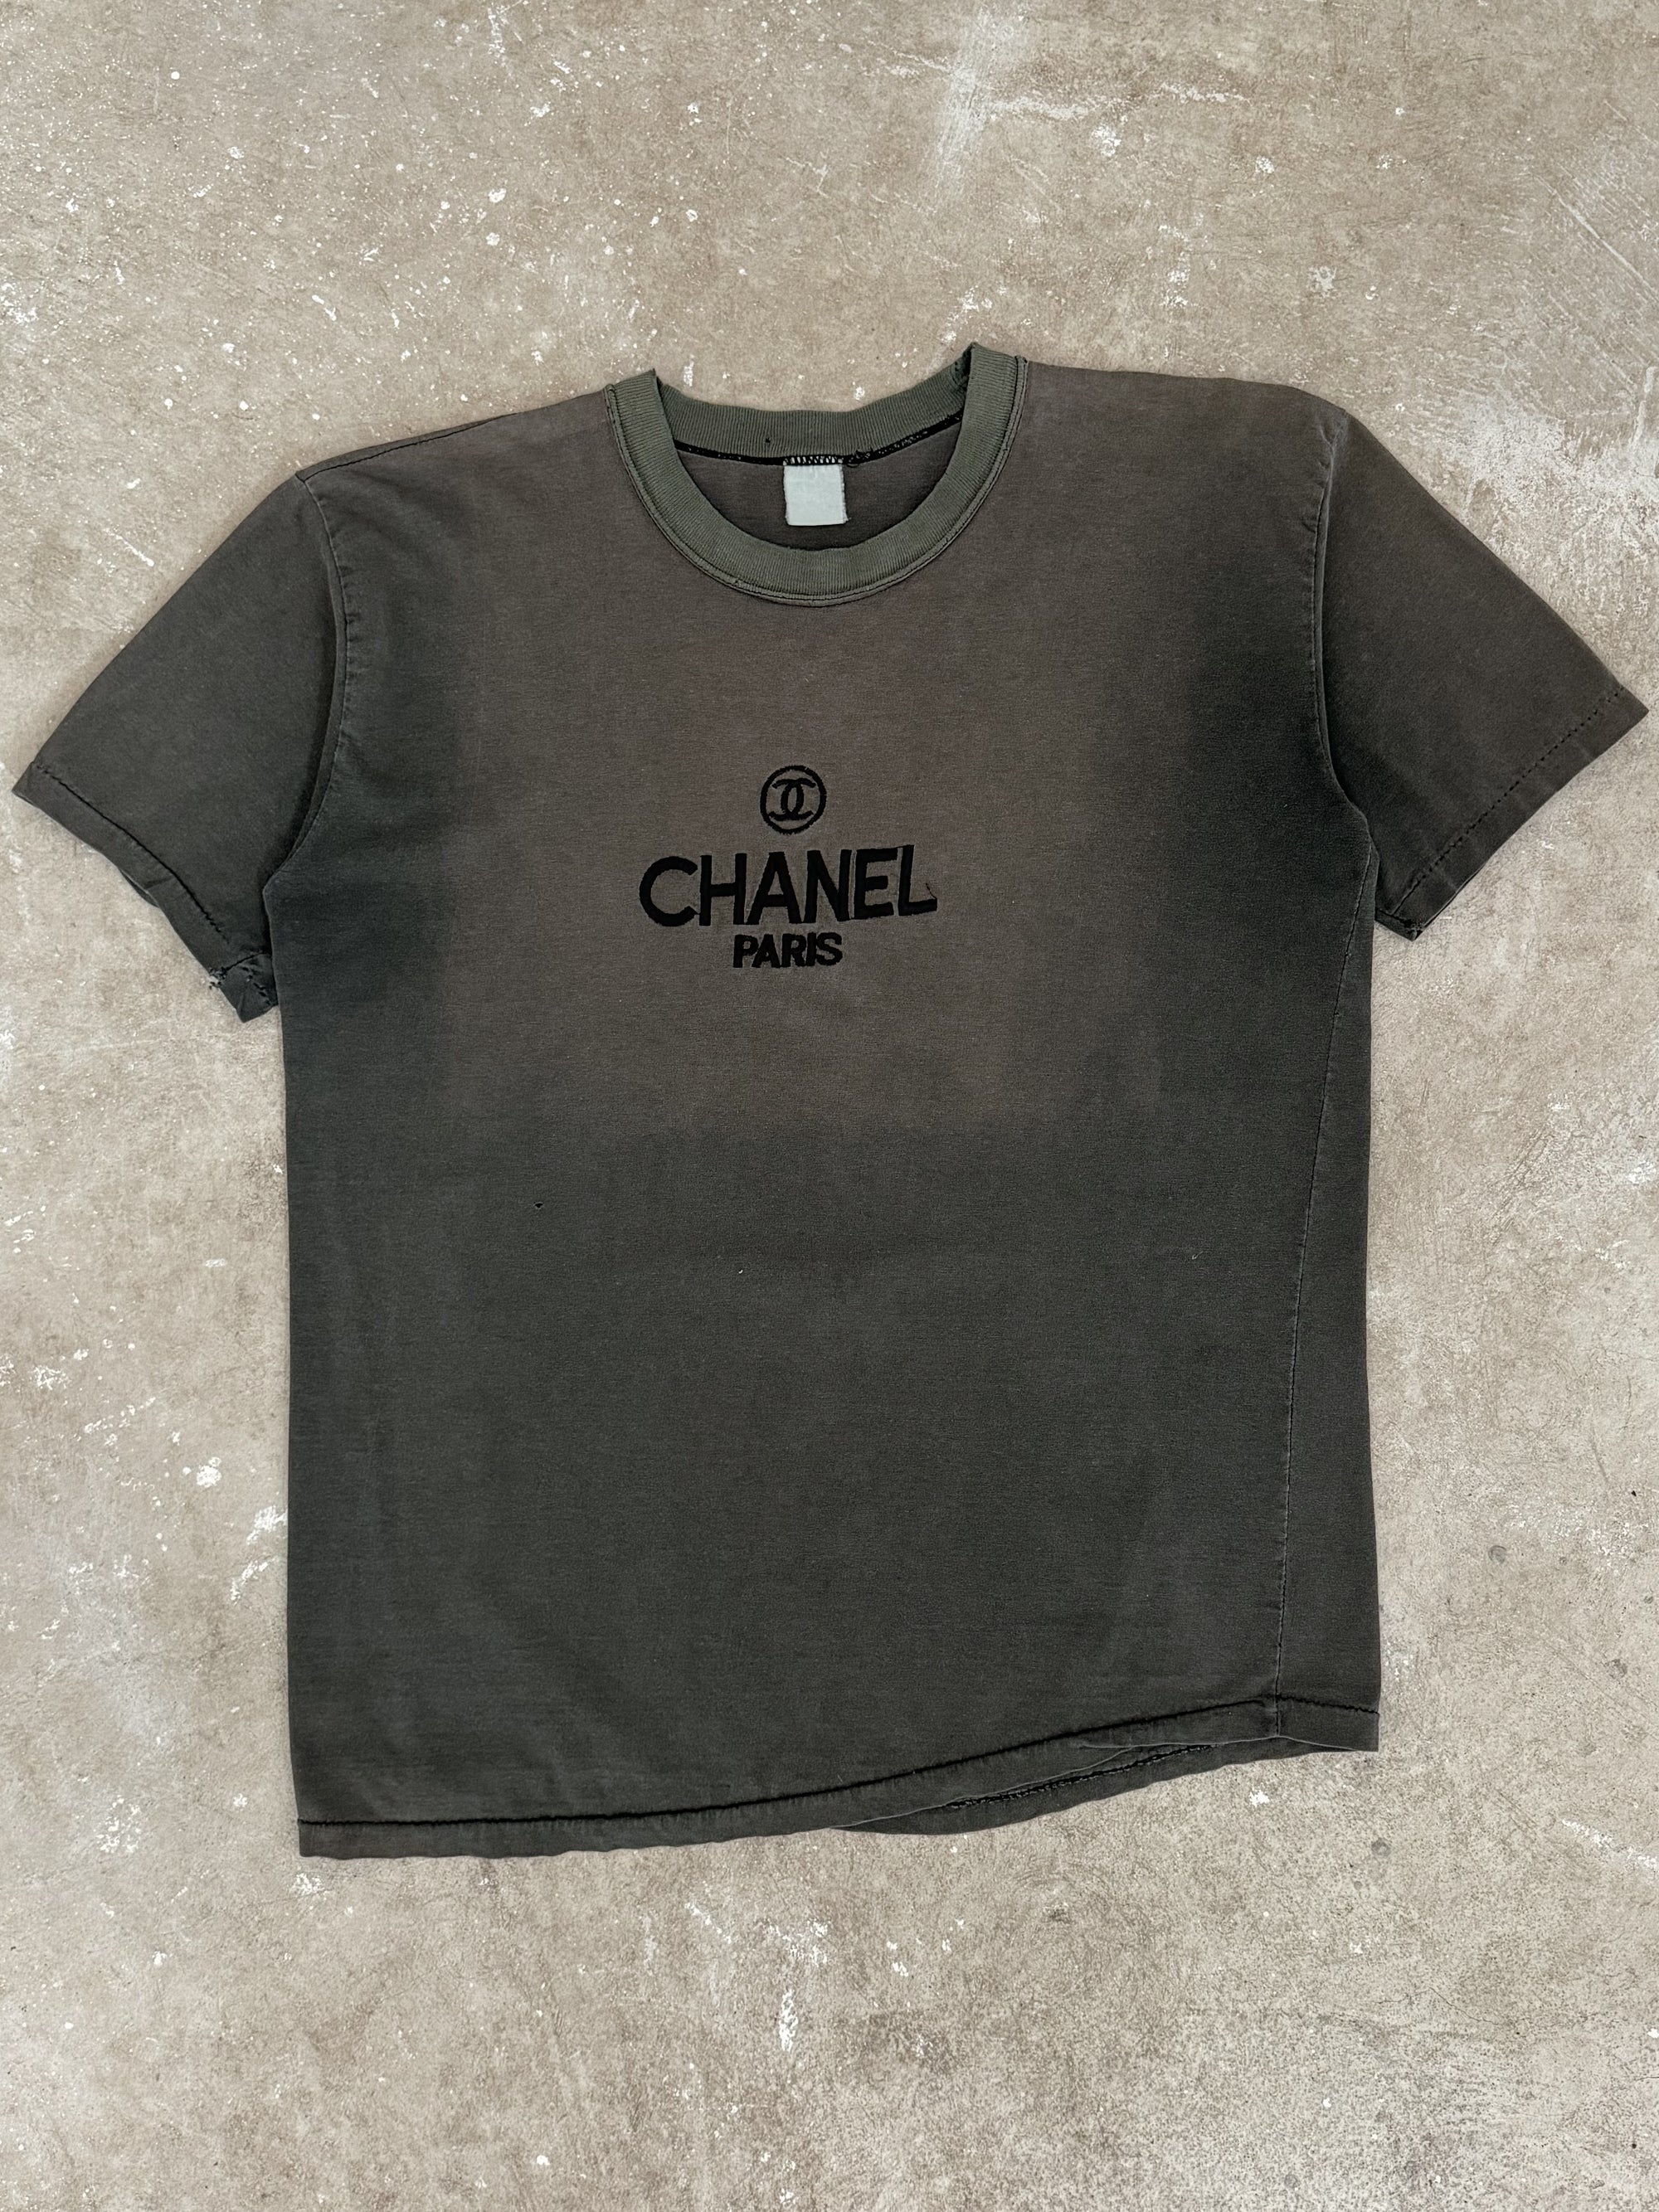 1980s/90s "Chanel" Bootleg Faded Tee (M)